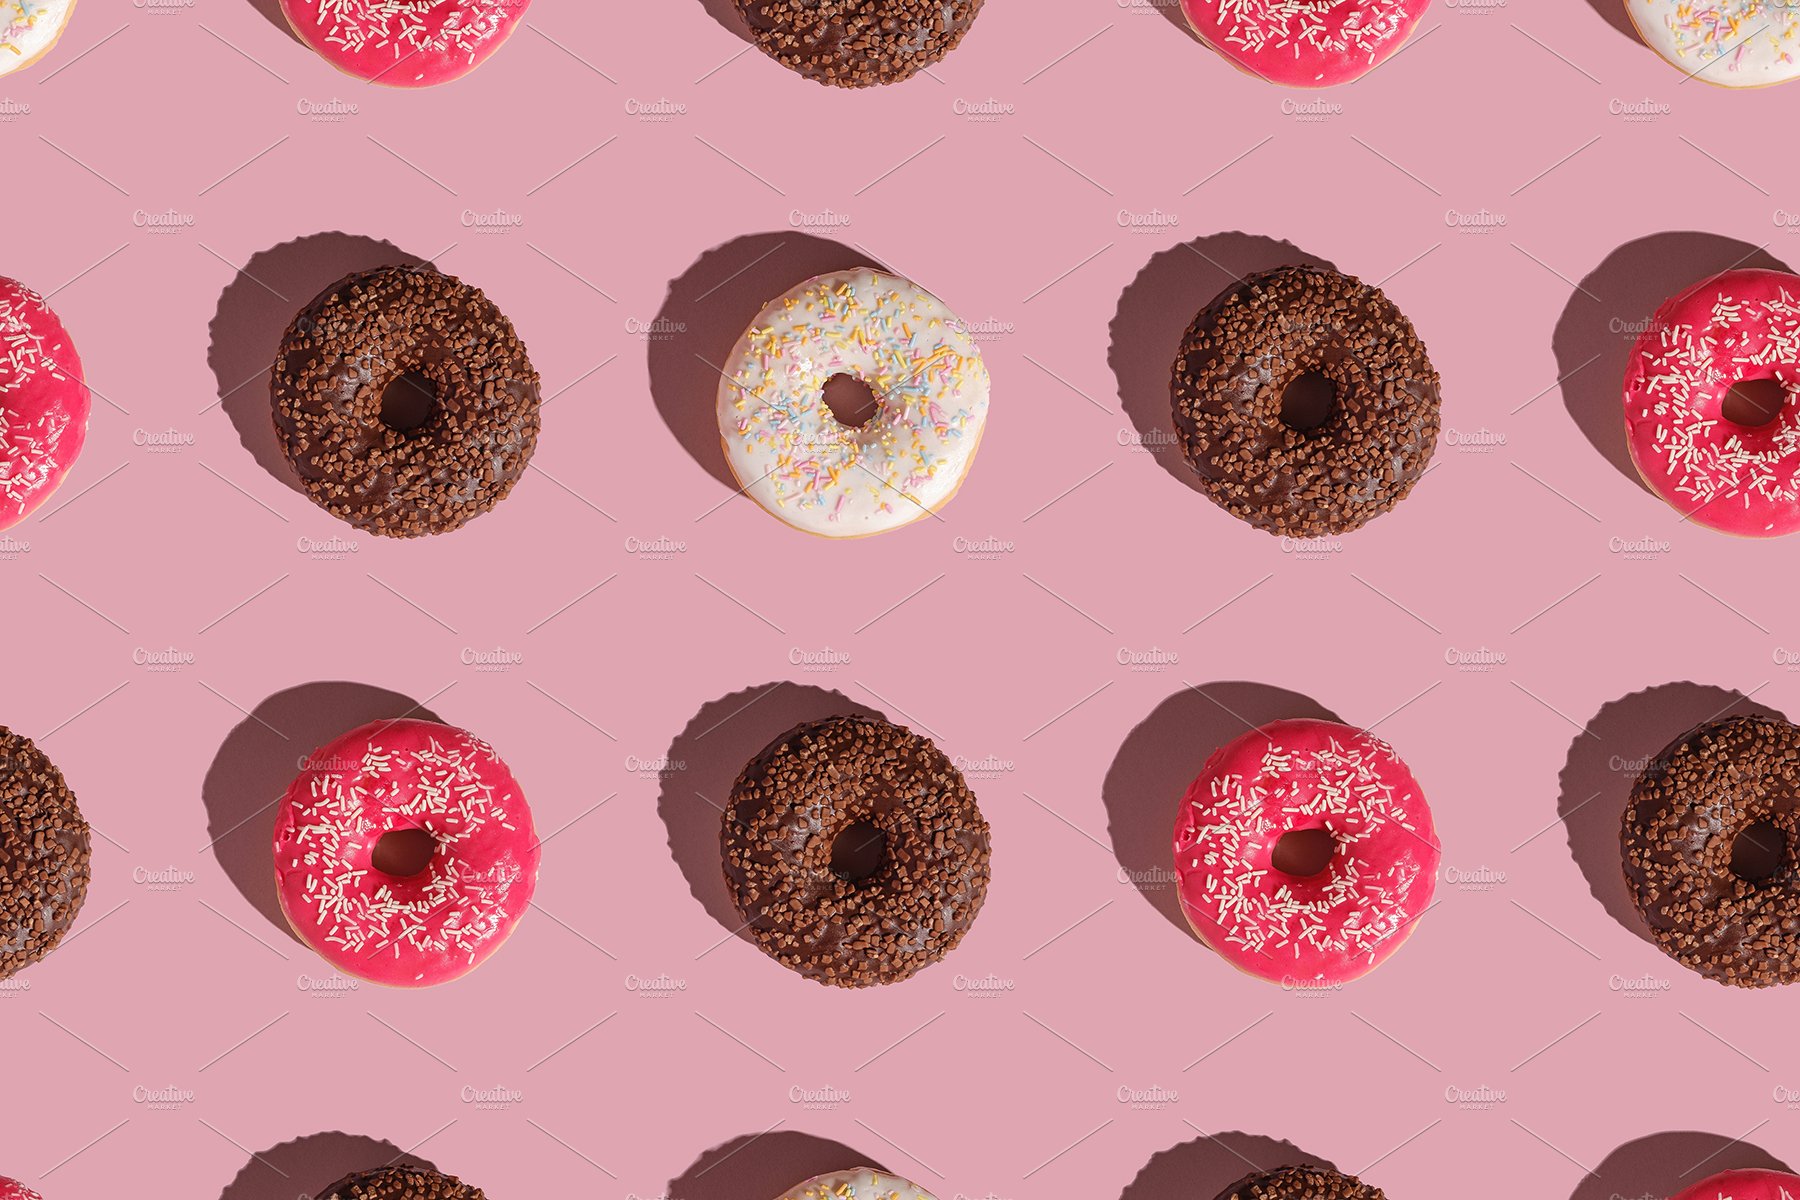 vanilla chocolate pink donuts prev 548